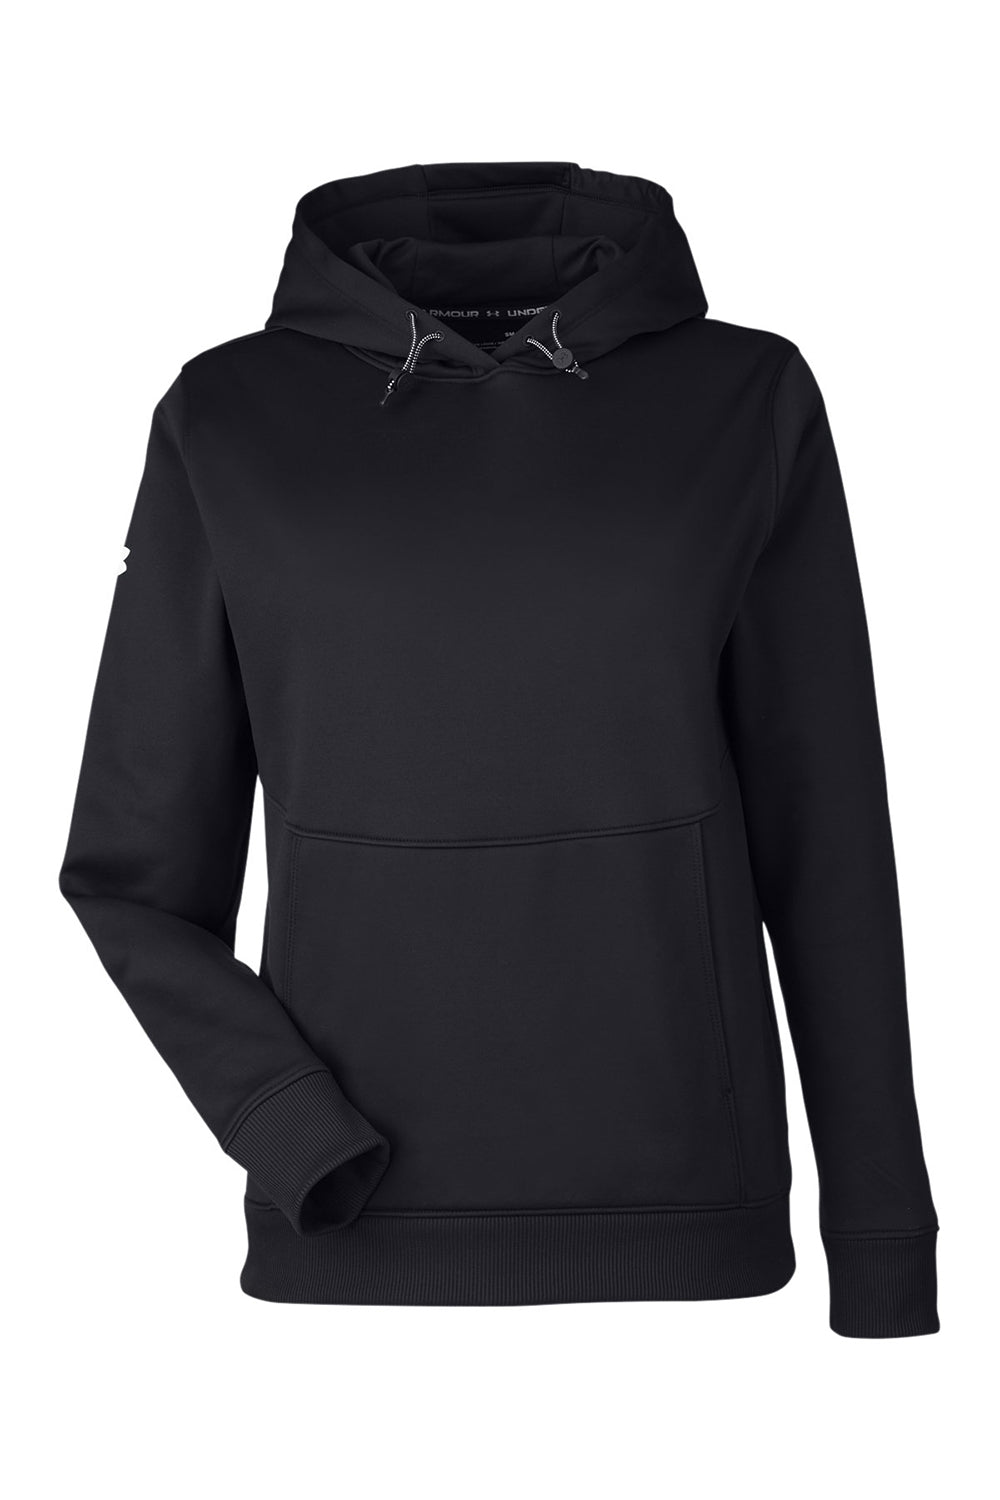 Under Armour 1370425 Womens Storm Armourfleece Water Resistant Hooded Sweatshirt Hoodie Black Flat Front